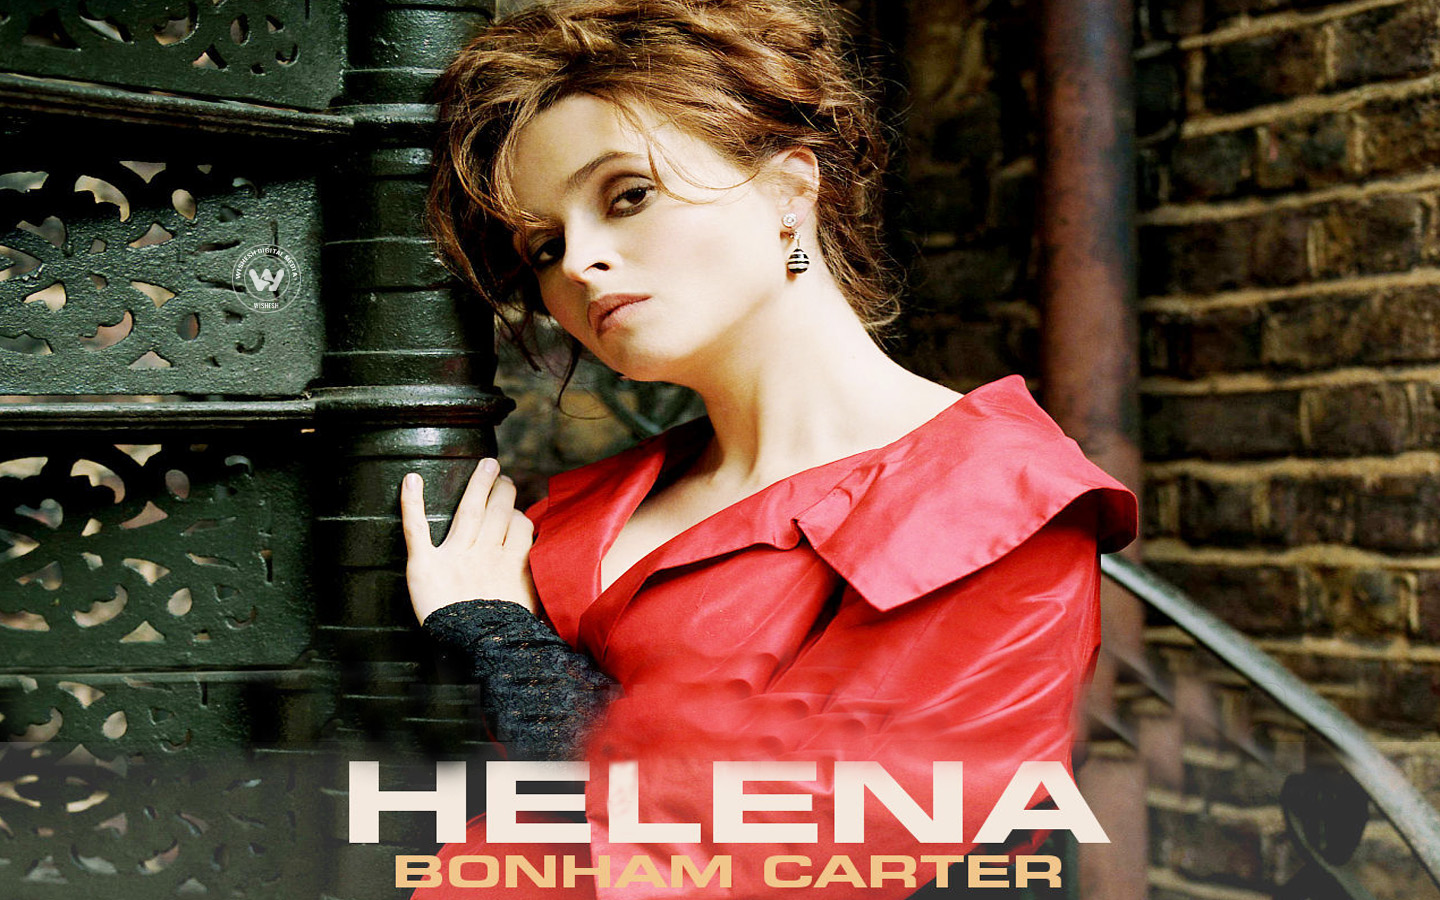 Helena Bonham Carter | Hollywood Actress Helena Bonham Carter | Wallpaper 10of 14 | Hollywood Actress Helena Bonham Carter